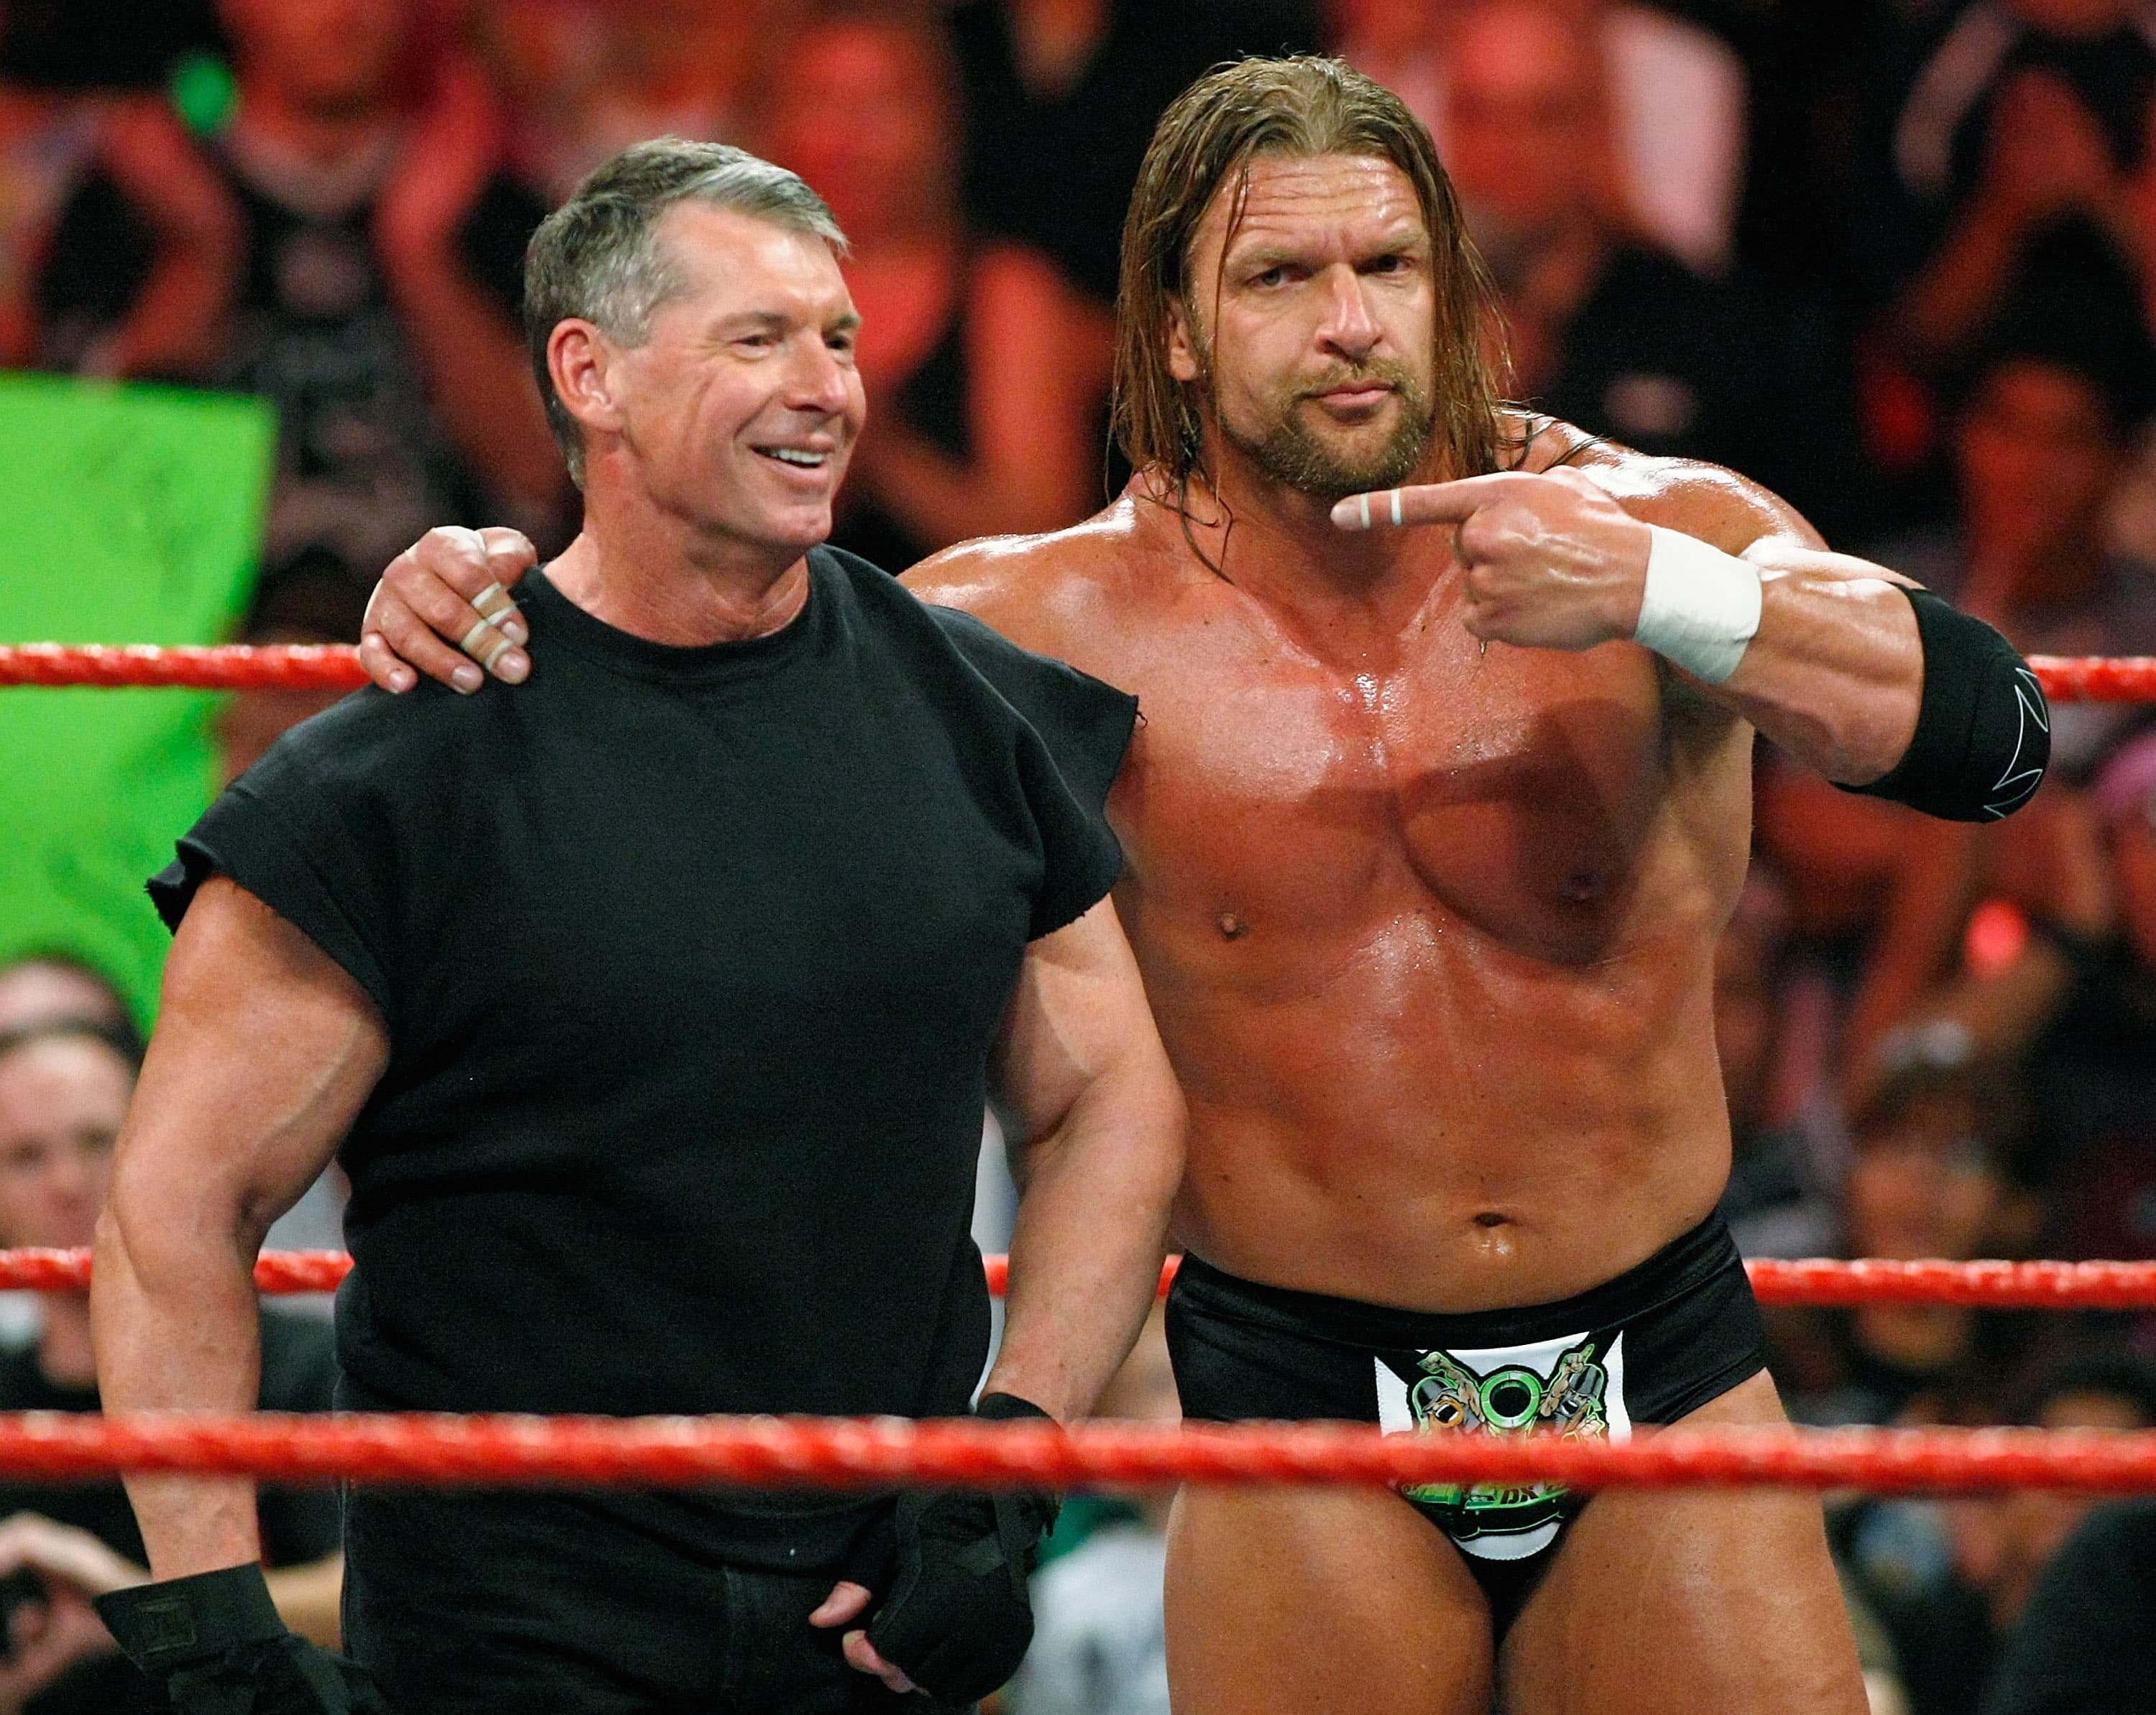 Vince McMahon scandals, retirement heighten WWE sale speculation